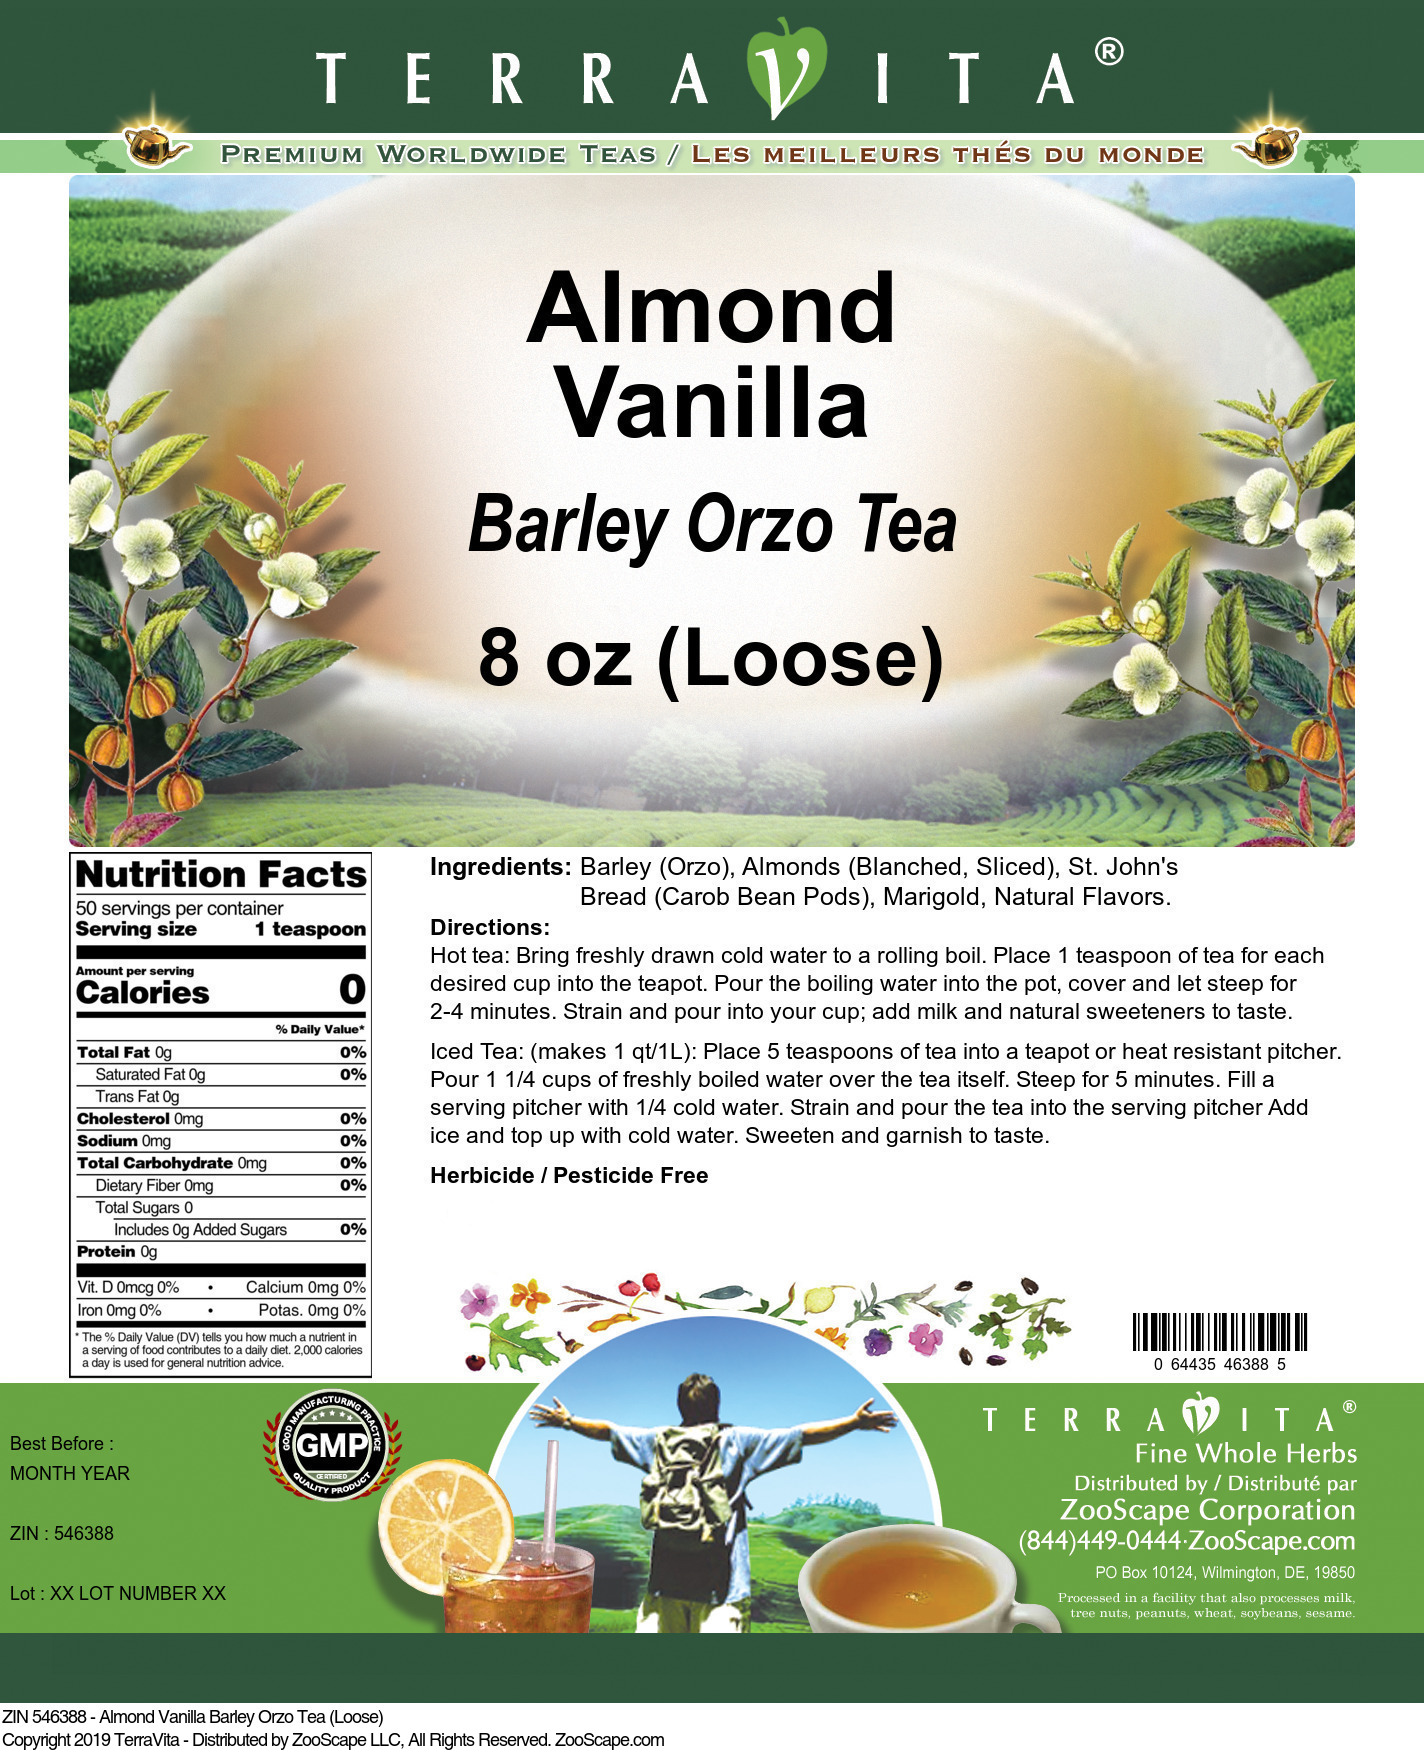 Almond Vanilla Barley Orzo Tea (Loose) - Label